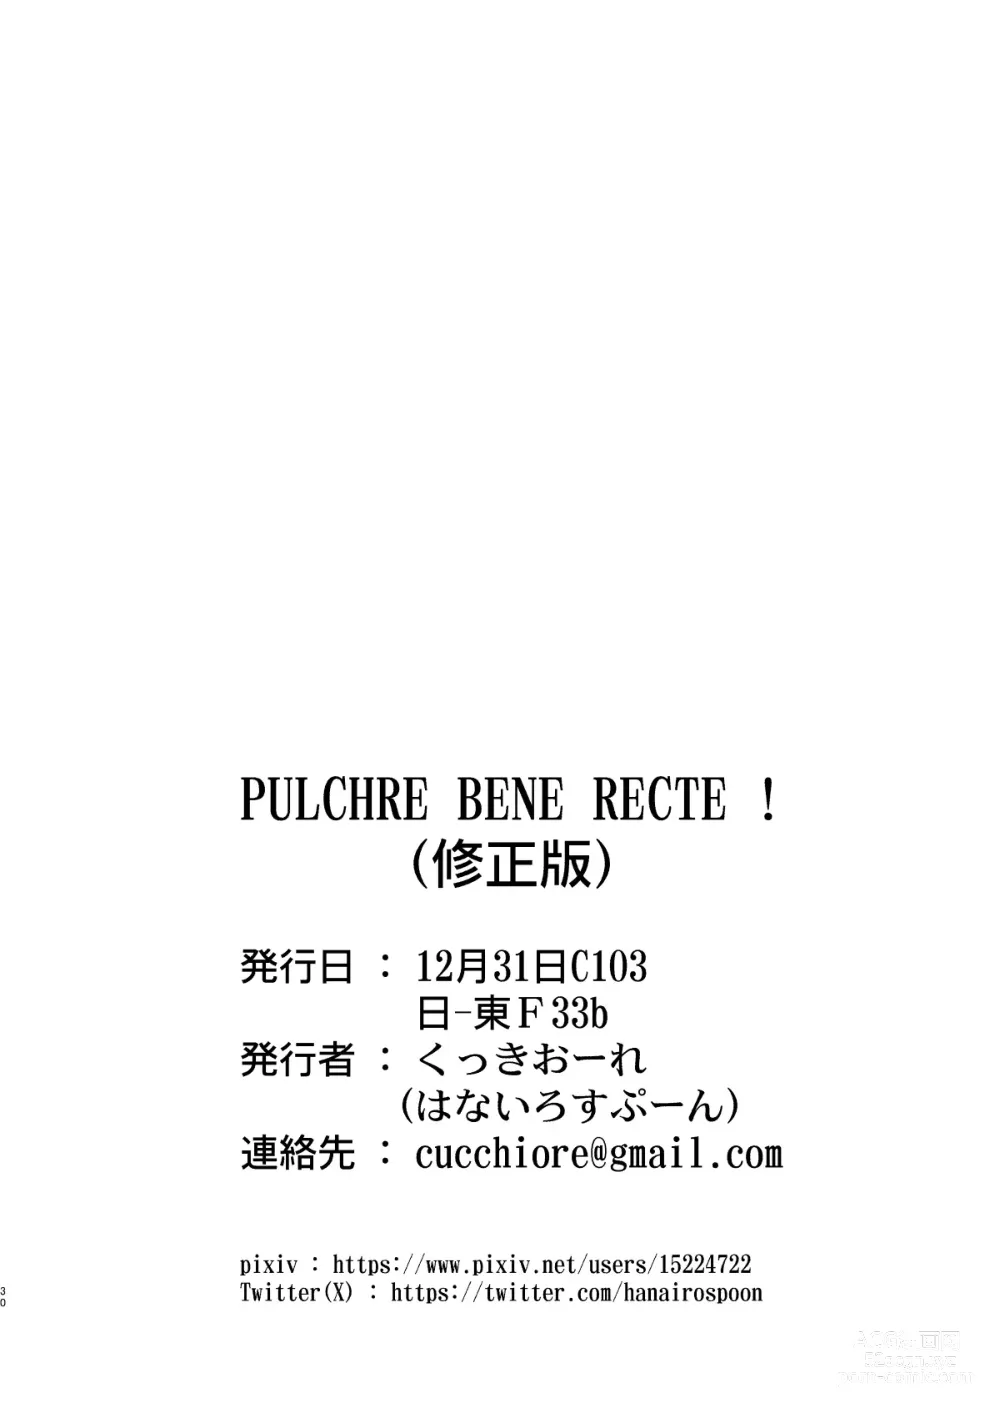 Page 32 of doujinshi PULCHRE BENE RECTE!